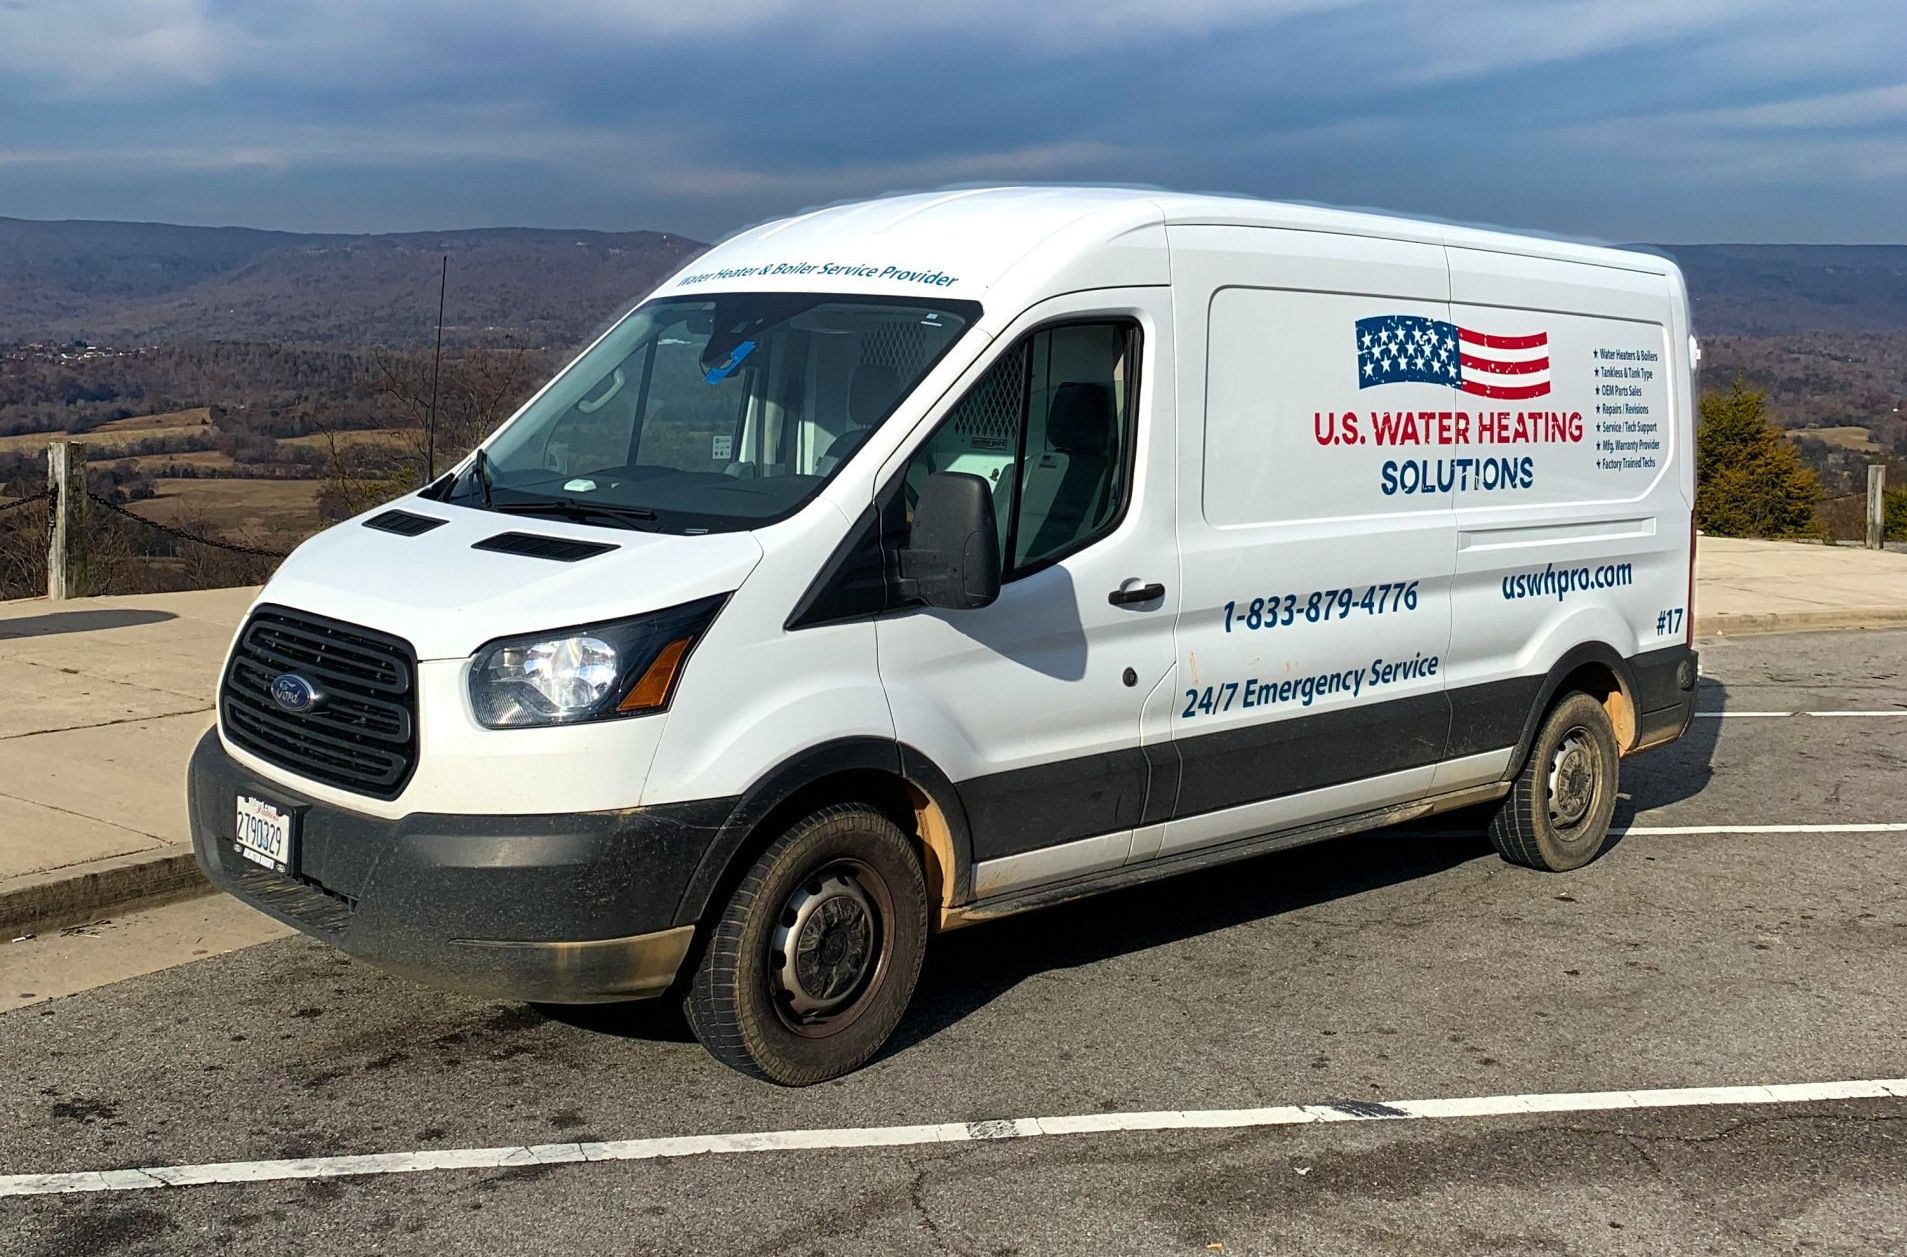 U.S. Water Heating Solutions truck